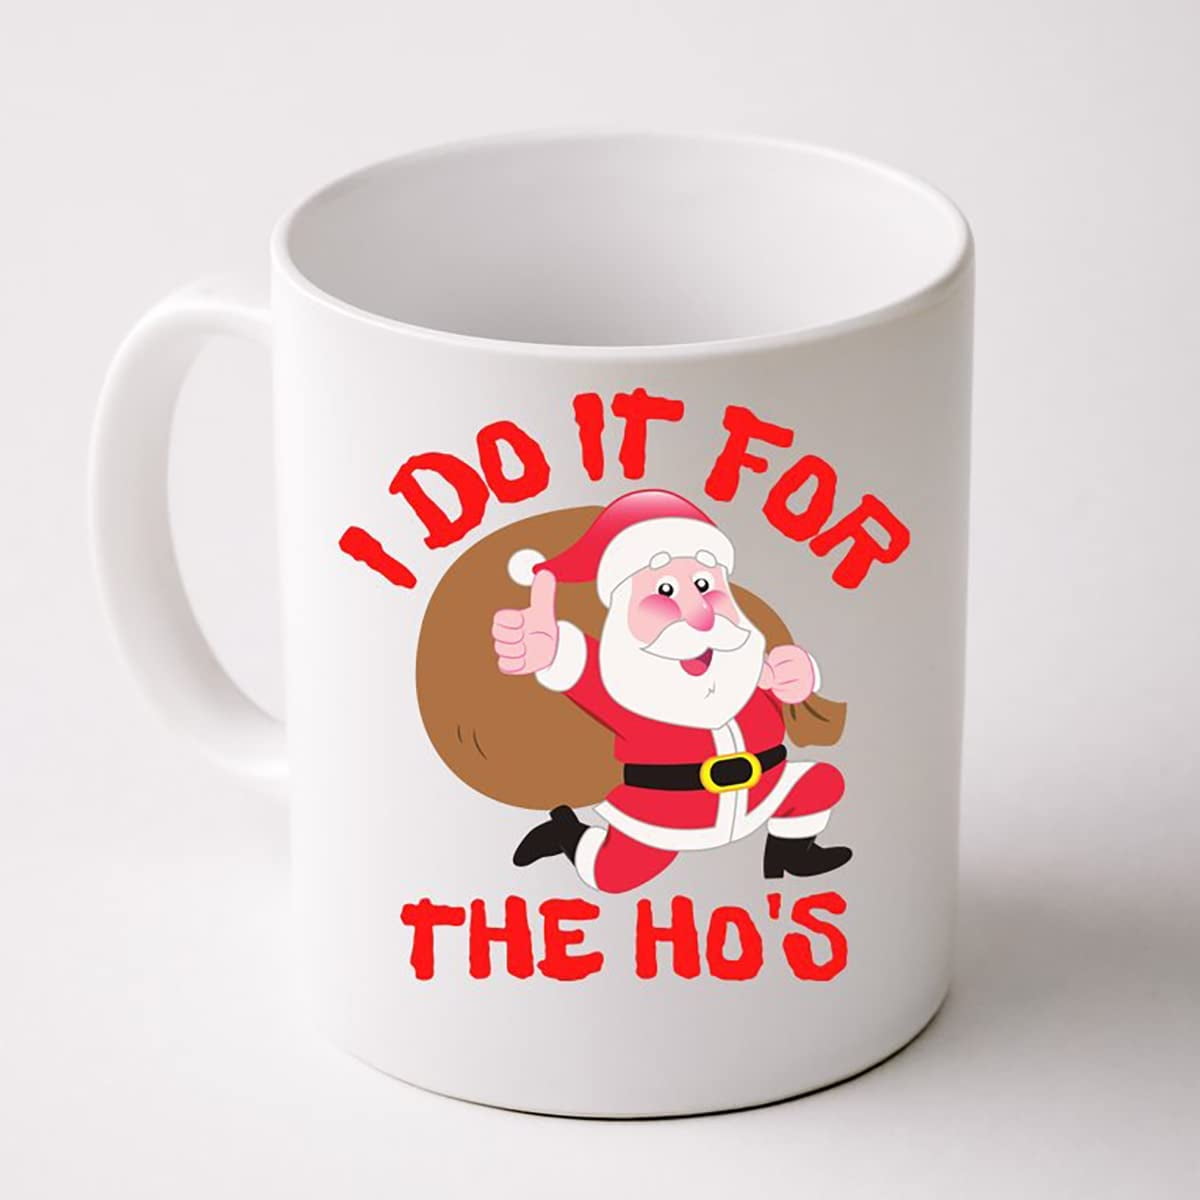 Vintage Santa Sleigh Reindeer Christmas Mug w Decorative Handle by The Love  Mug